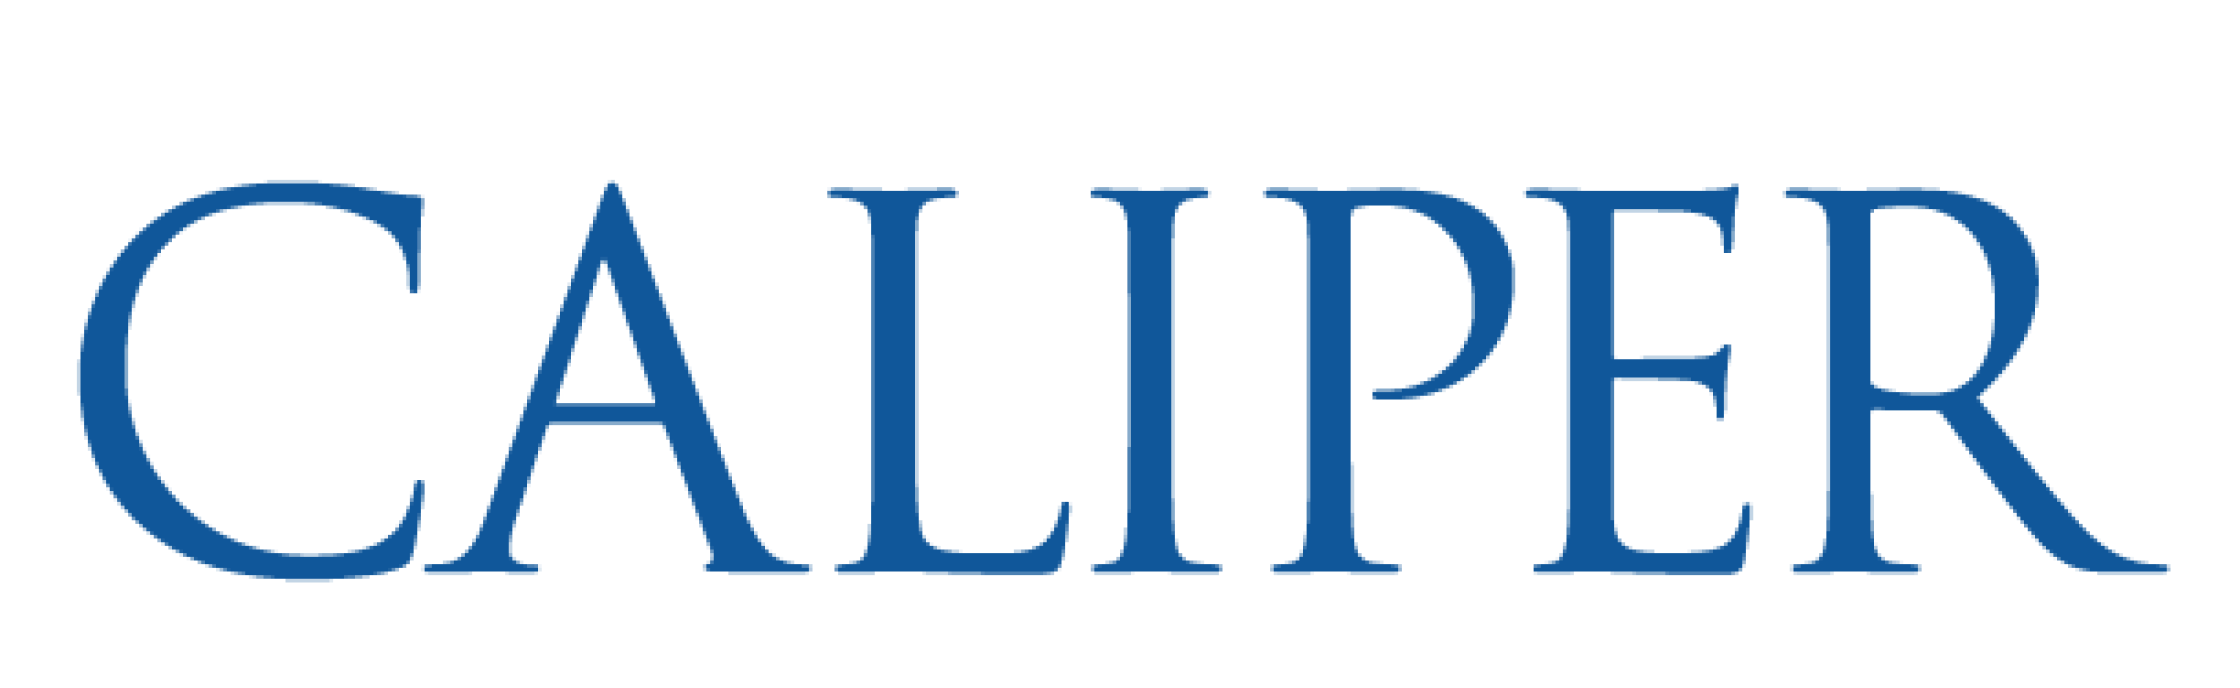 capiler logo